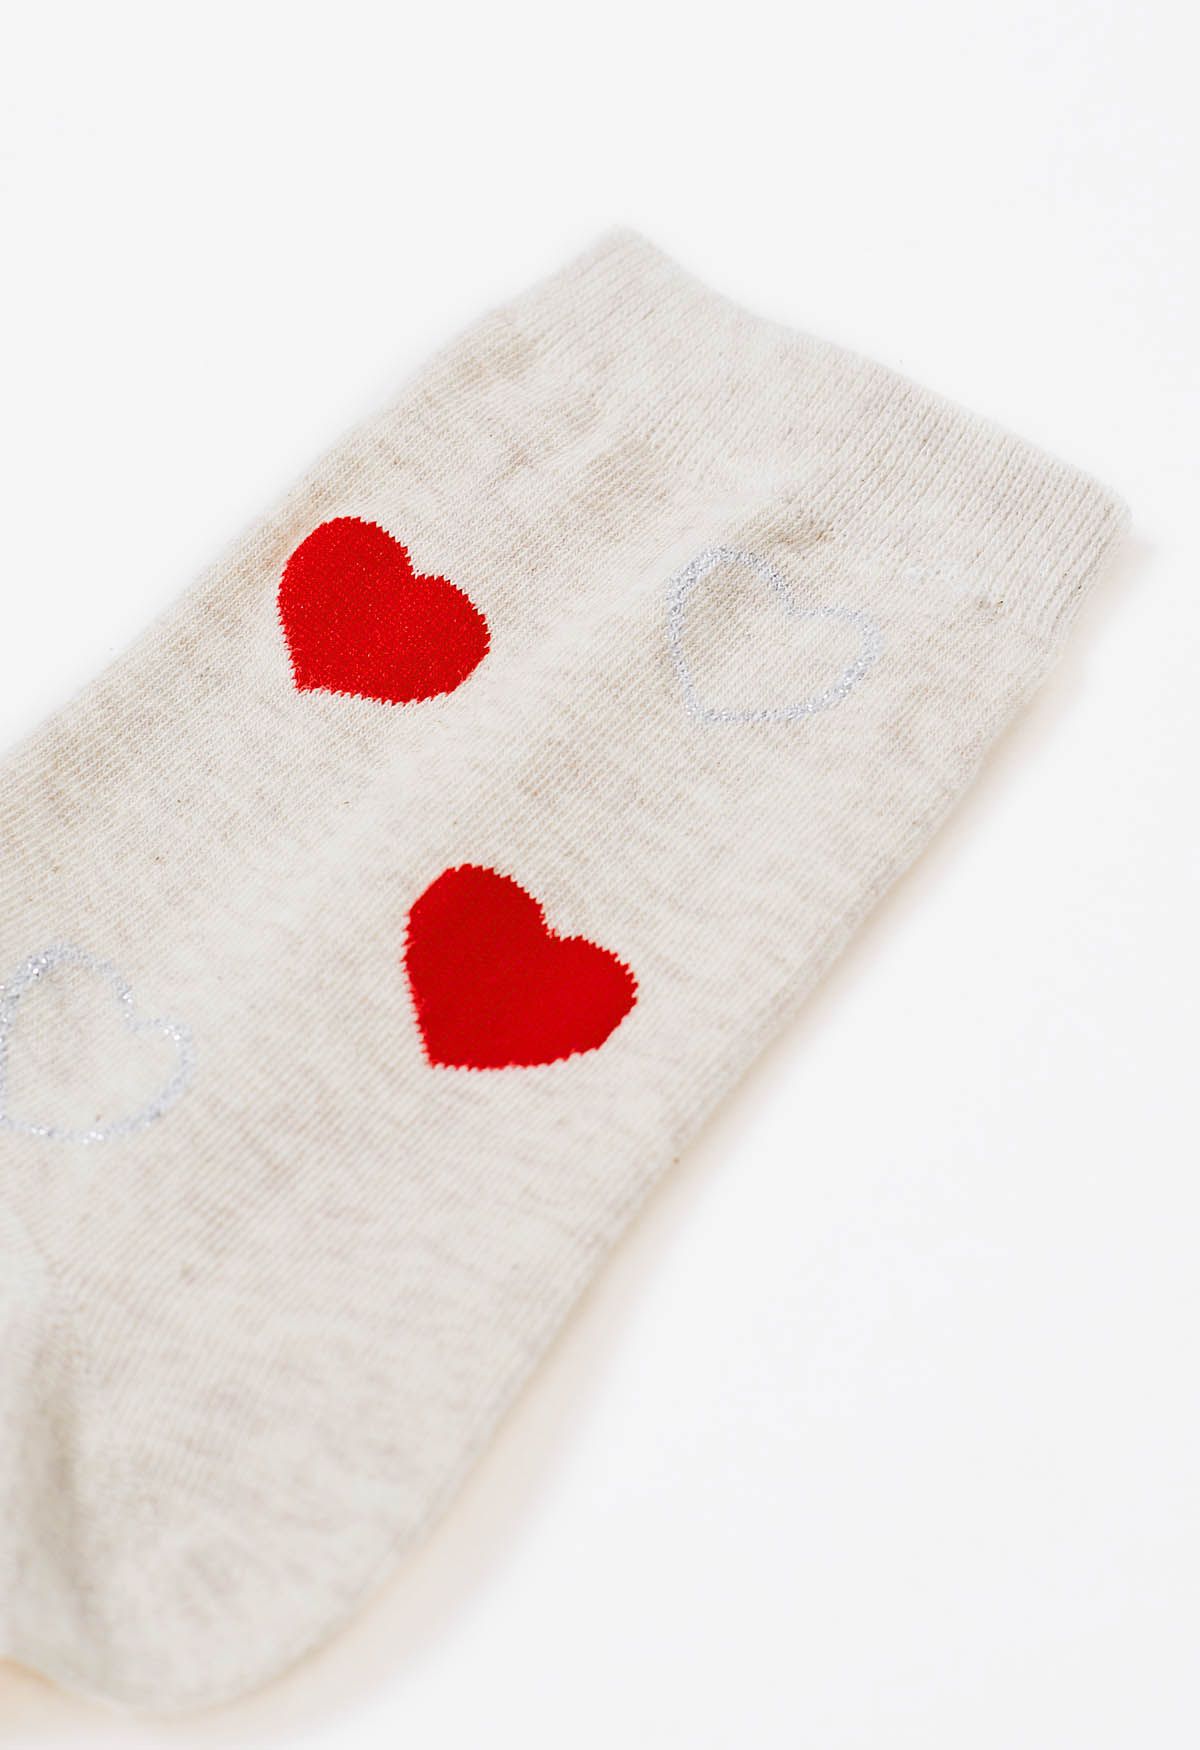 Passionate Heart Cotton Crew Socks